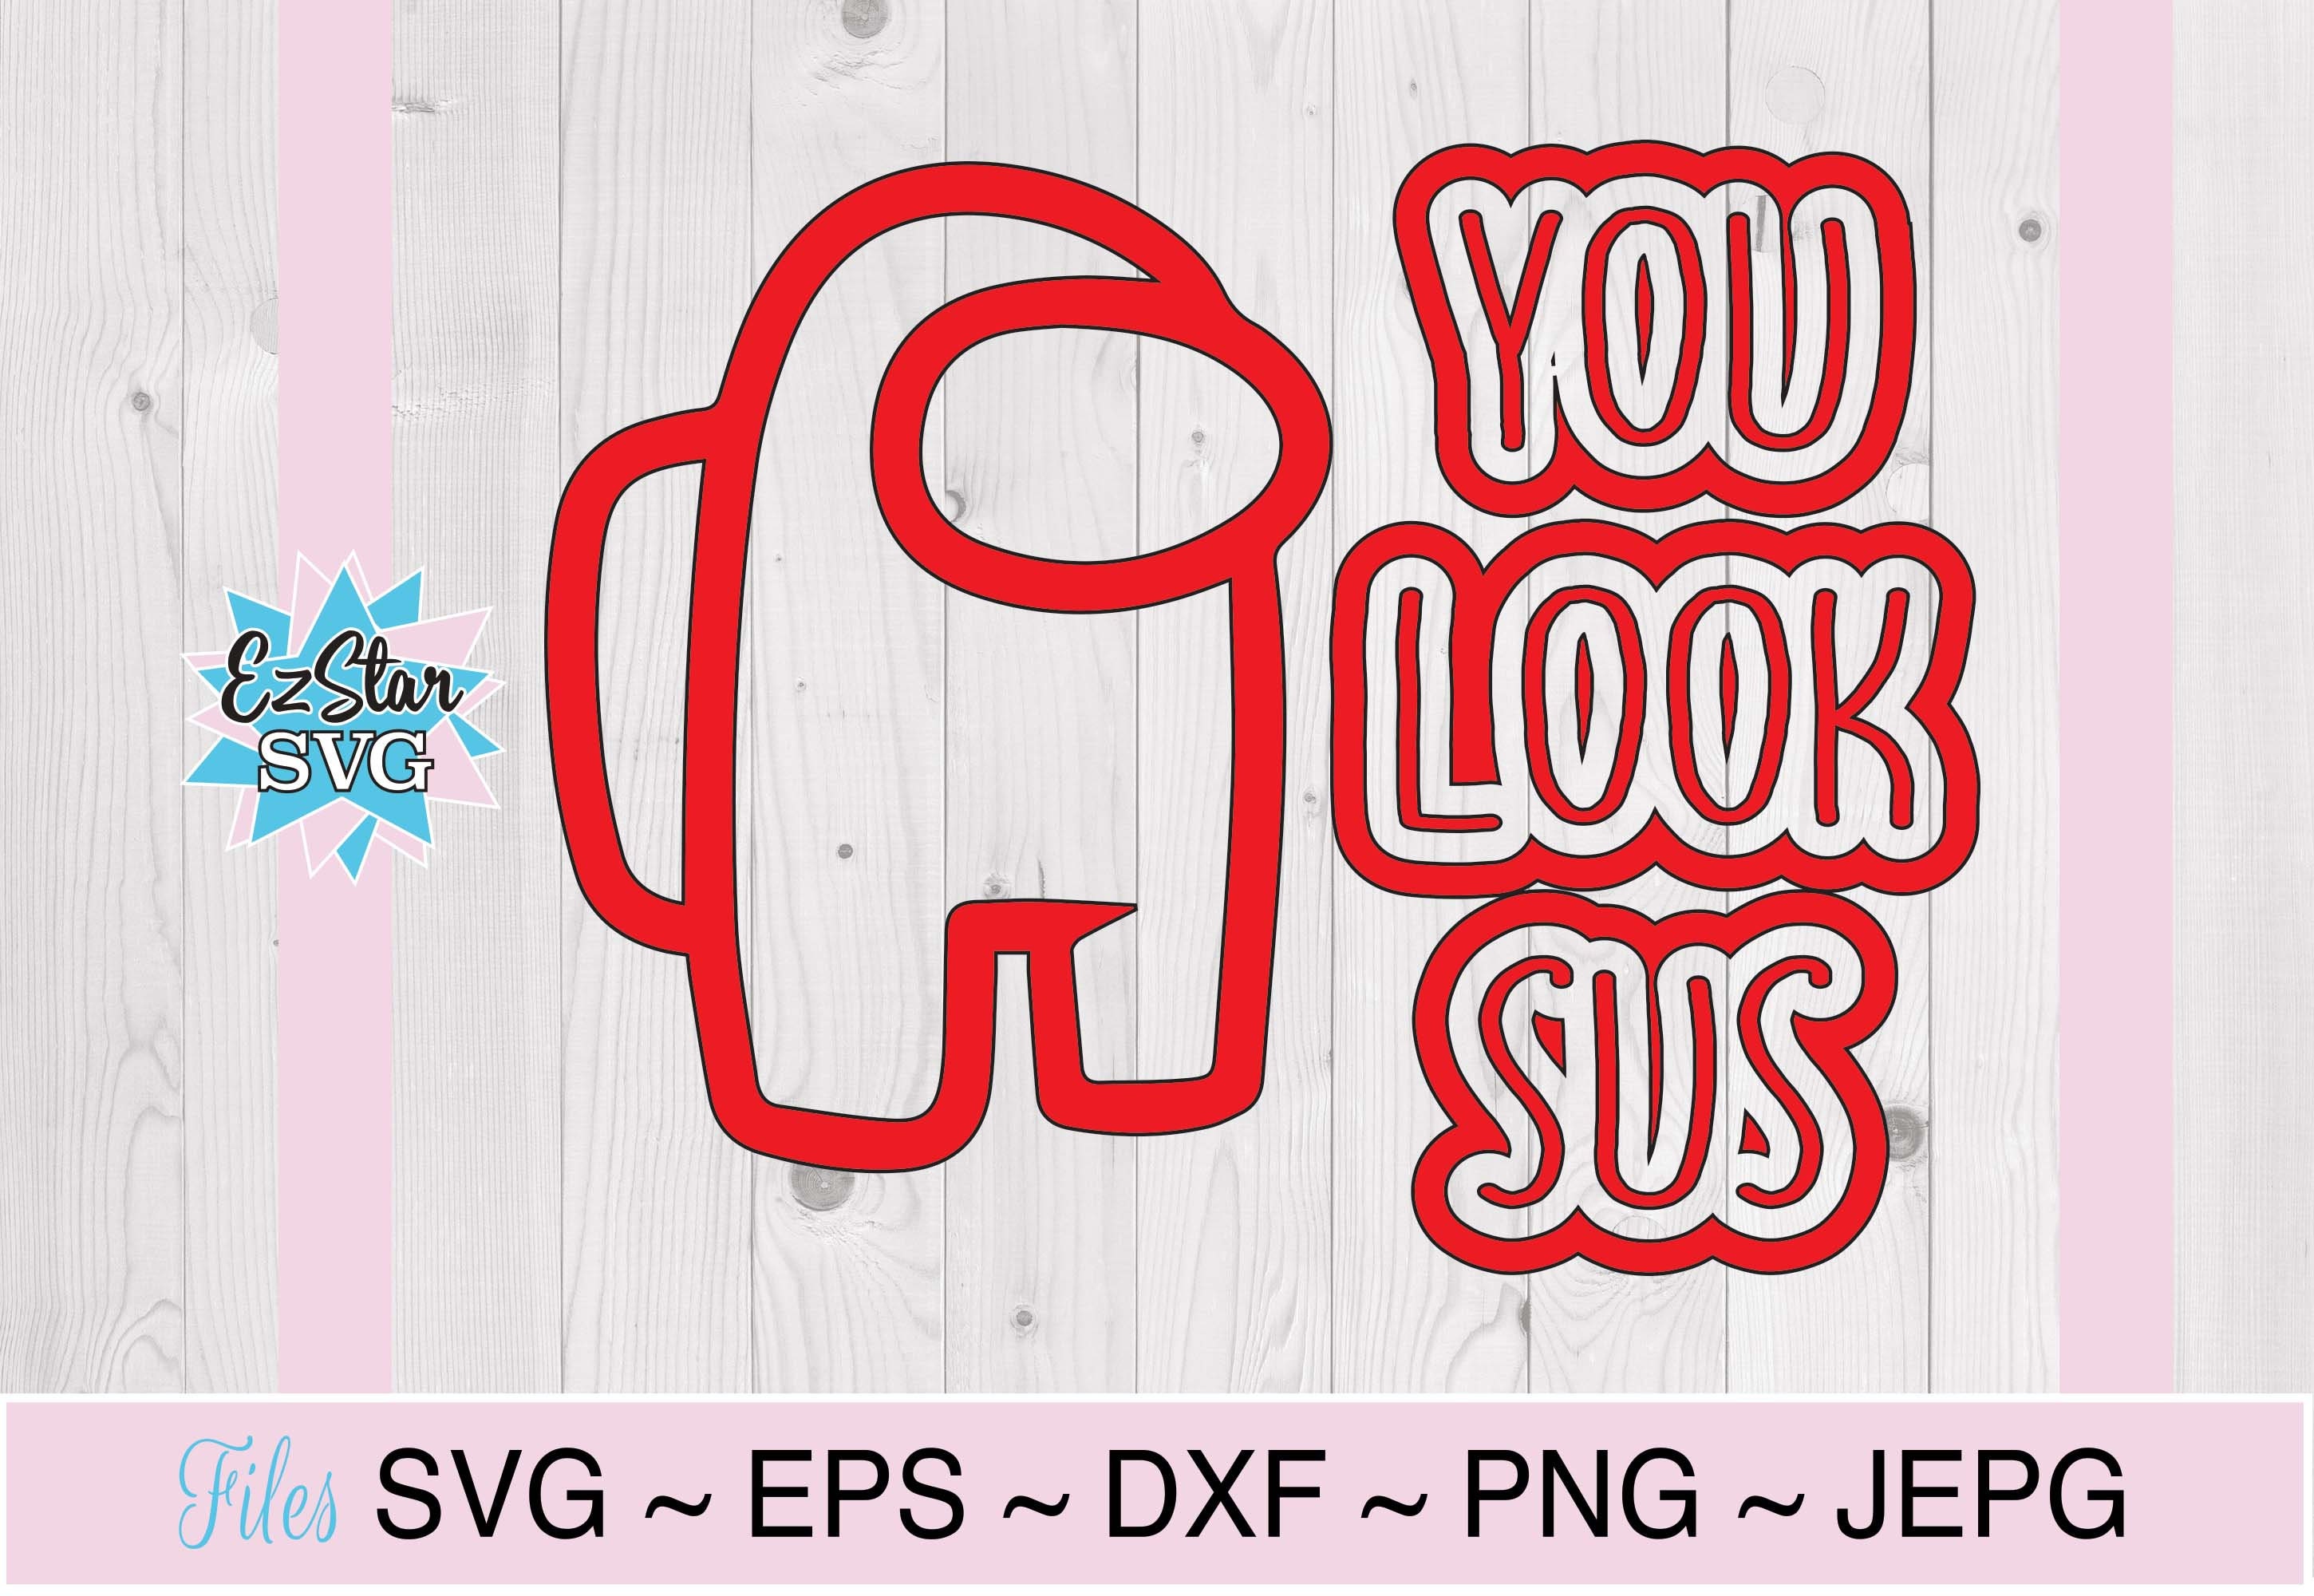 You look sus SVG PNG JPG